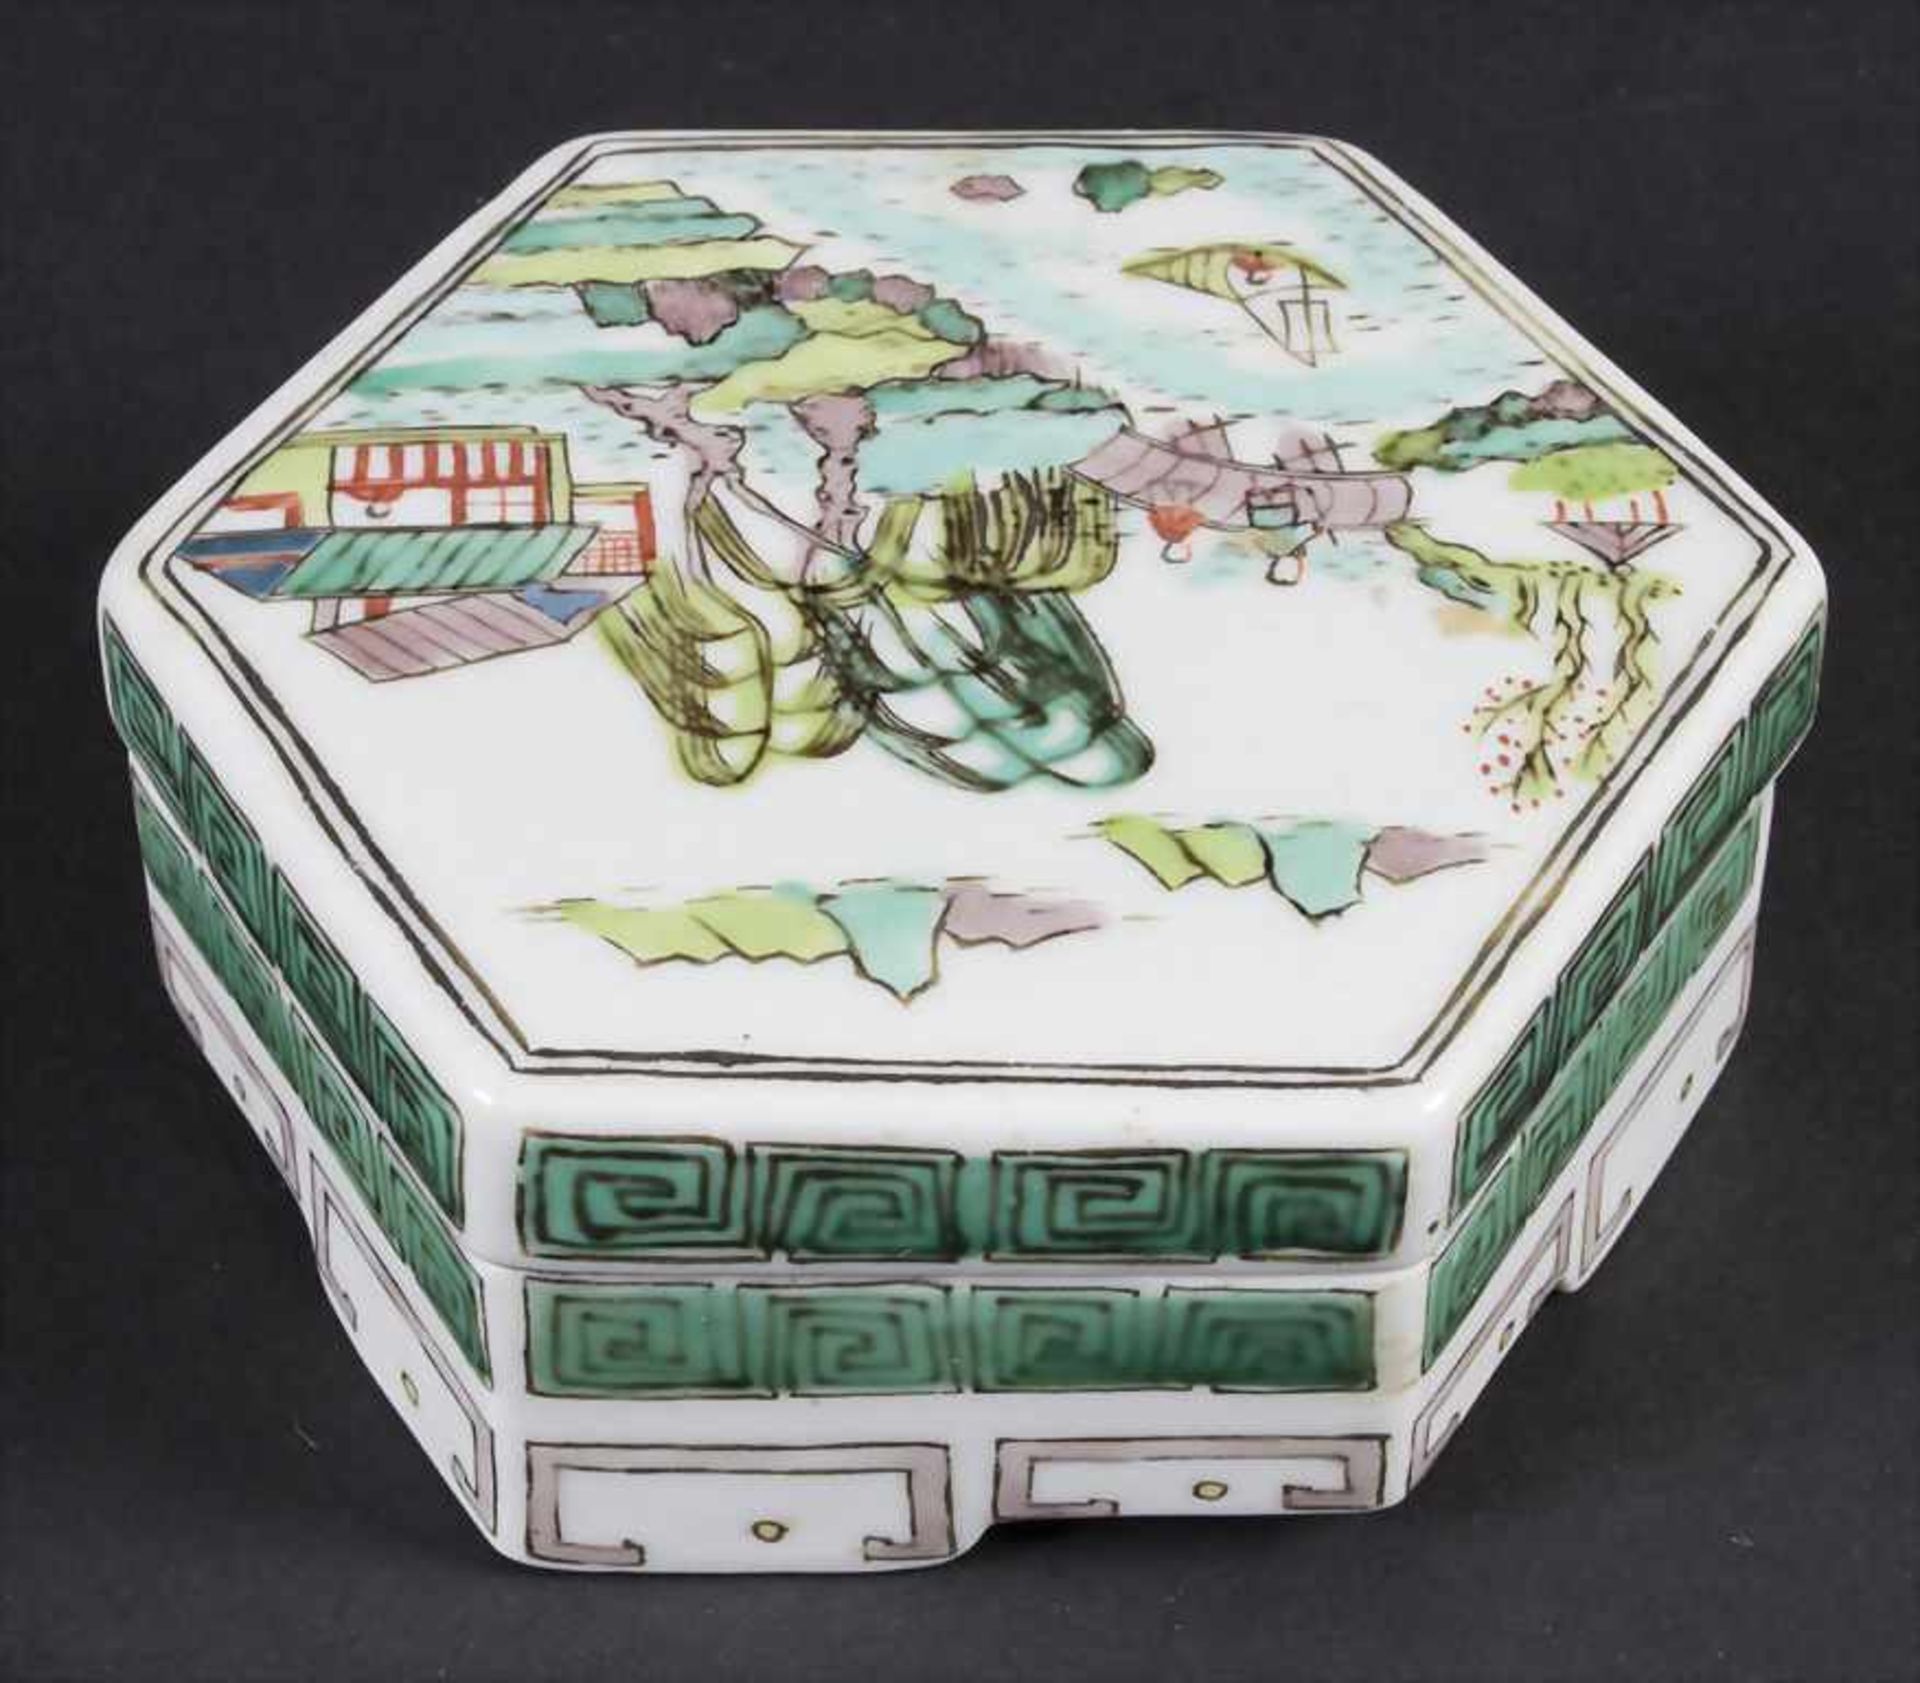 Porzellan-Deckeldose / A porcelain lidded box, China, Qing-Dynastie, wohl 18. Jh. - Bild 2 aus 5